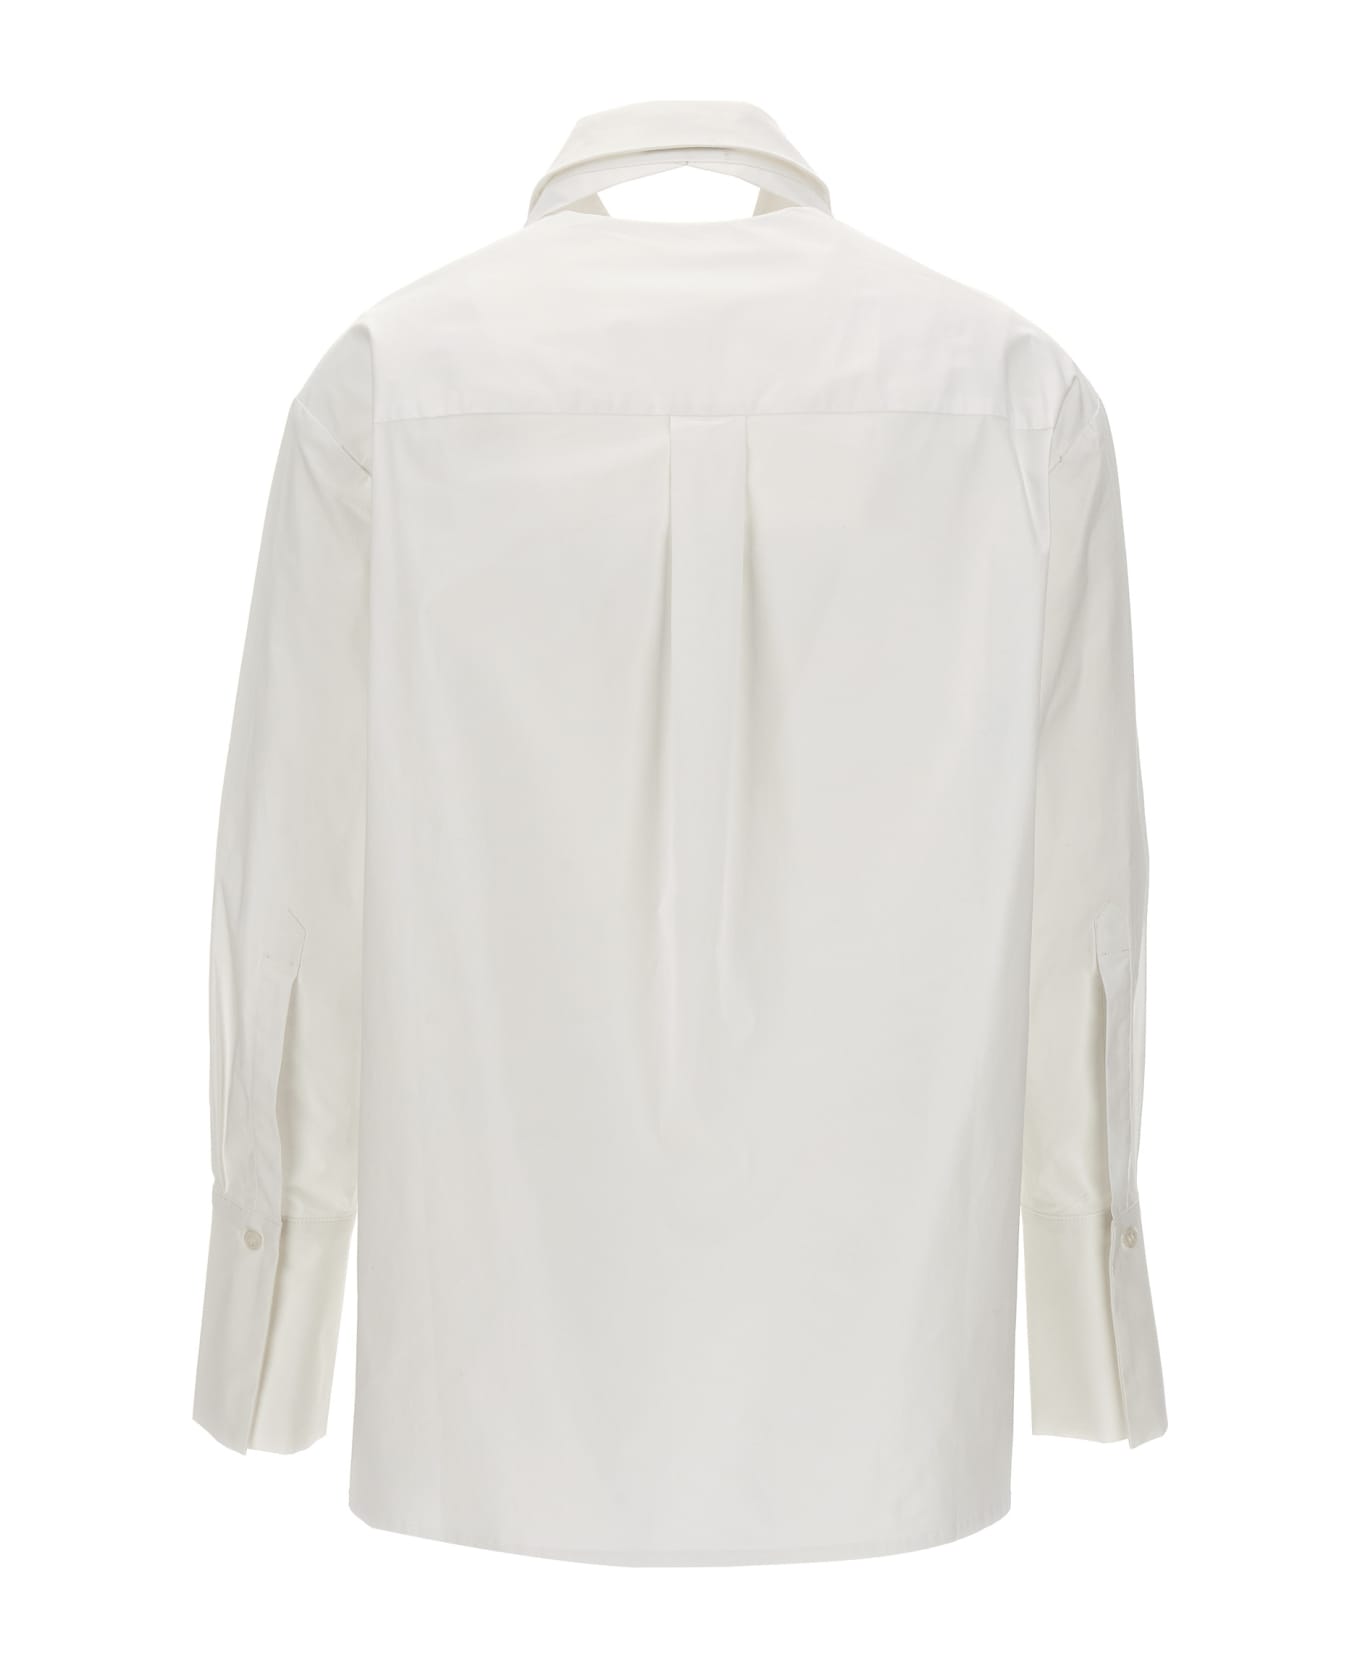 Balossa 'mirta' Shirt - White